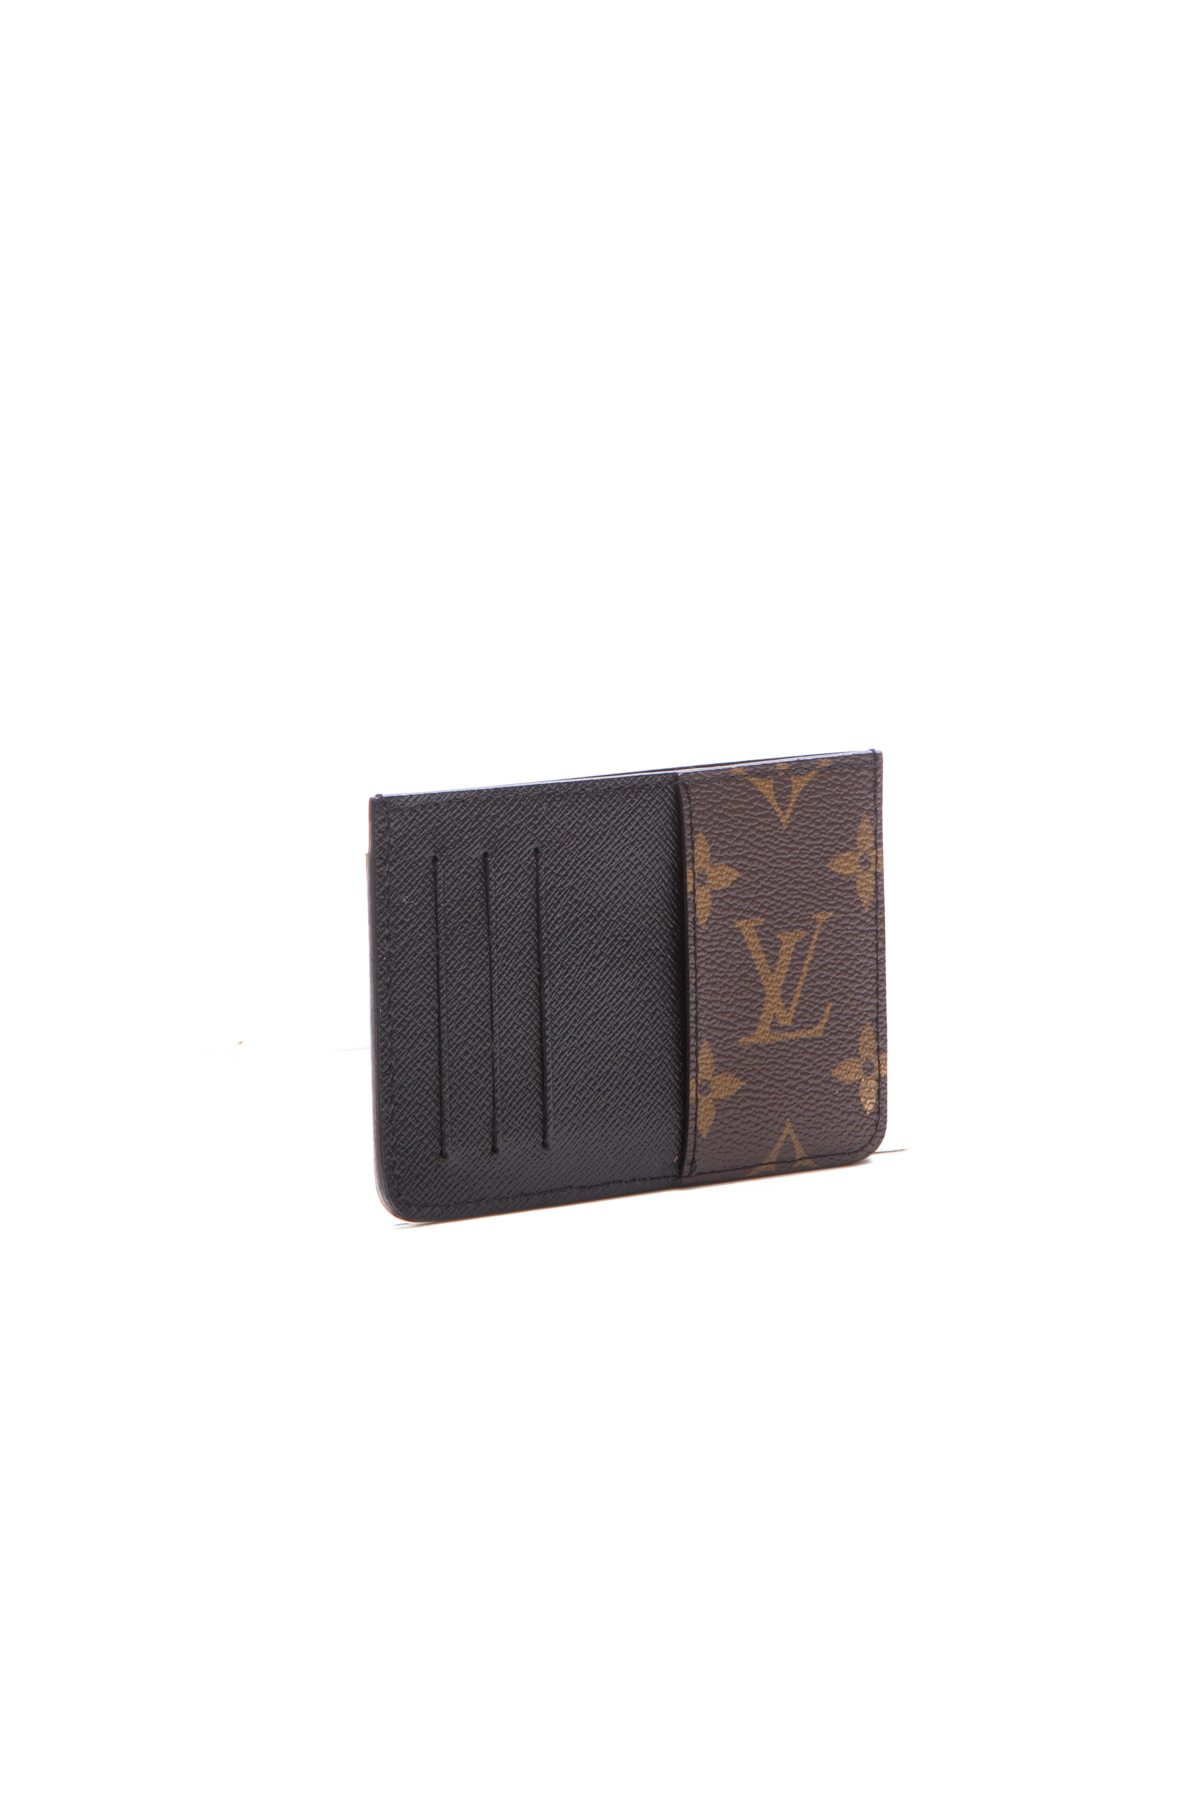 Louis Vuitton Neo Porte Cartes Cardholder Review on  